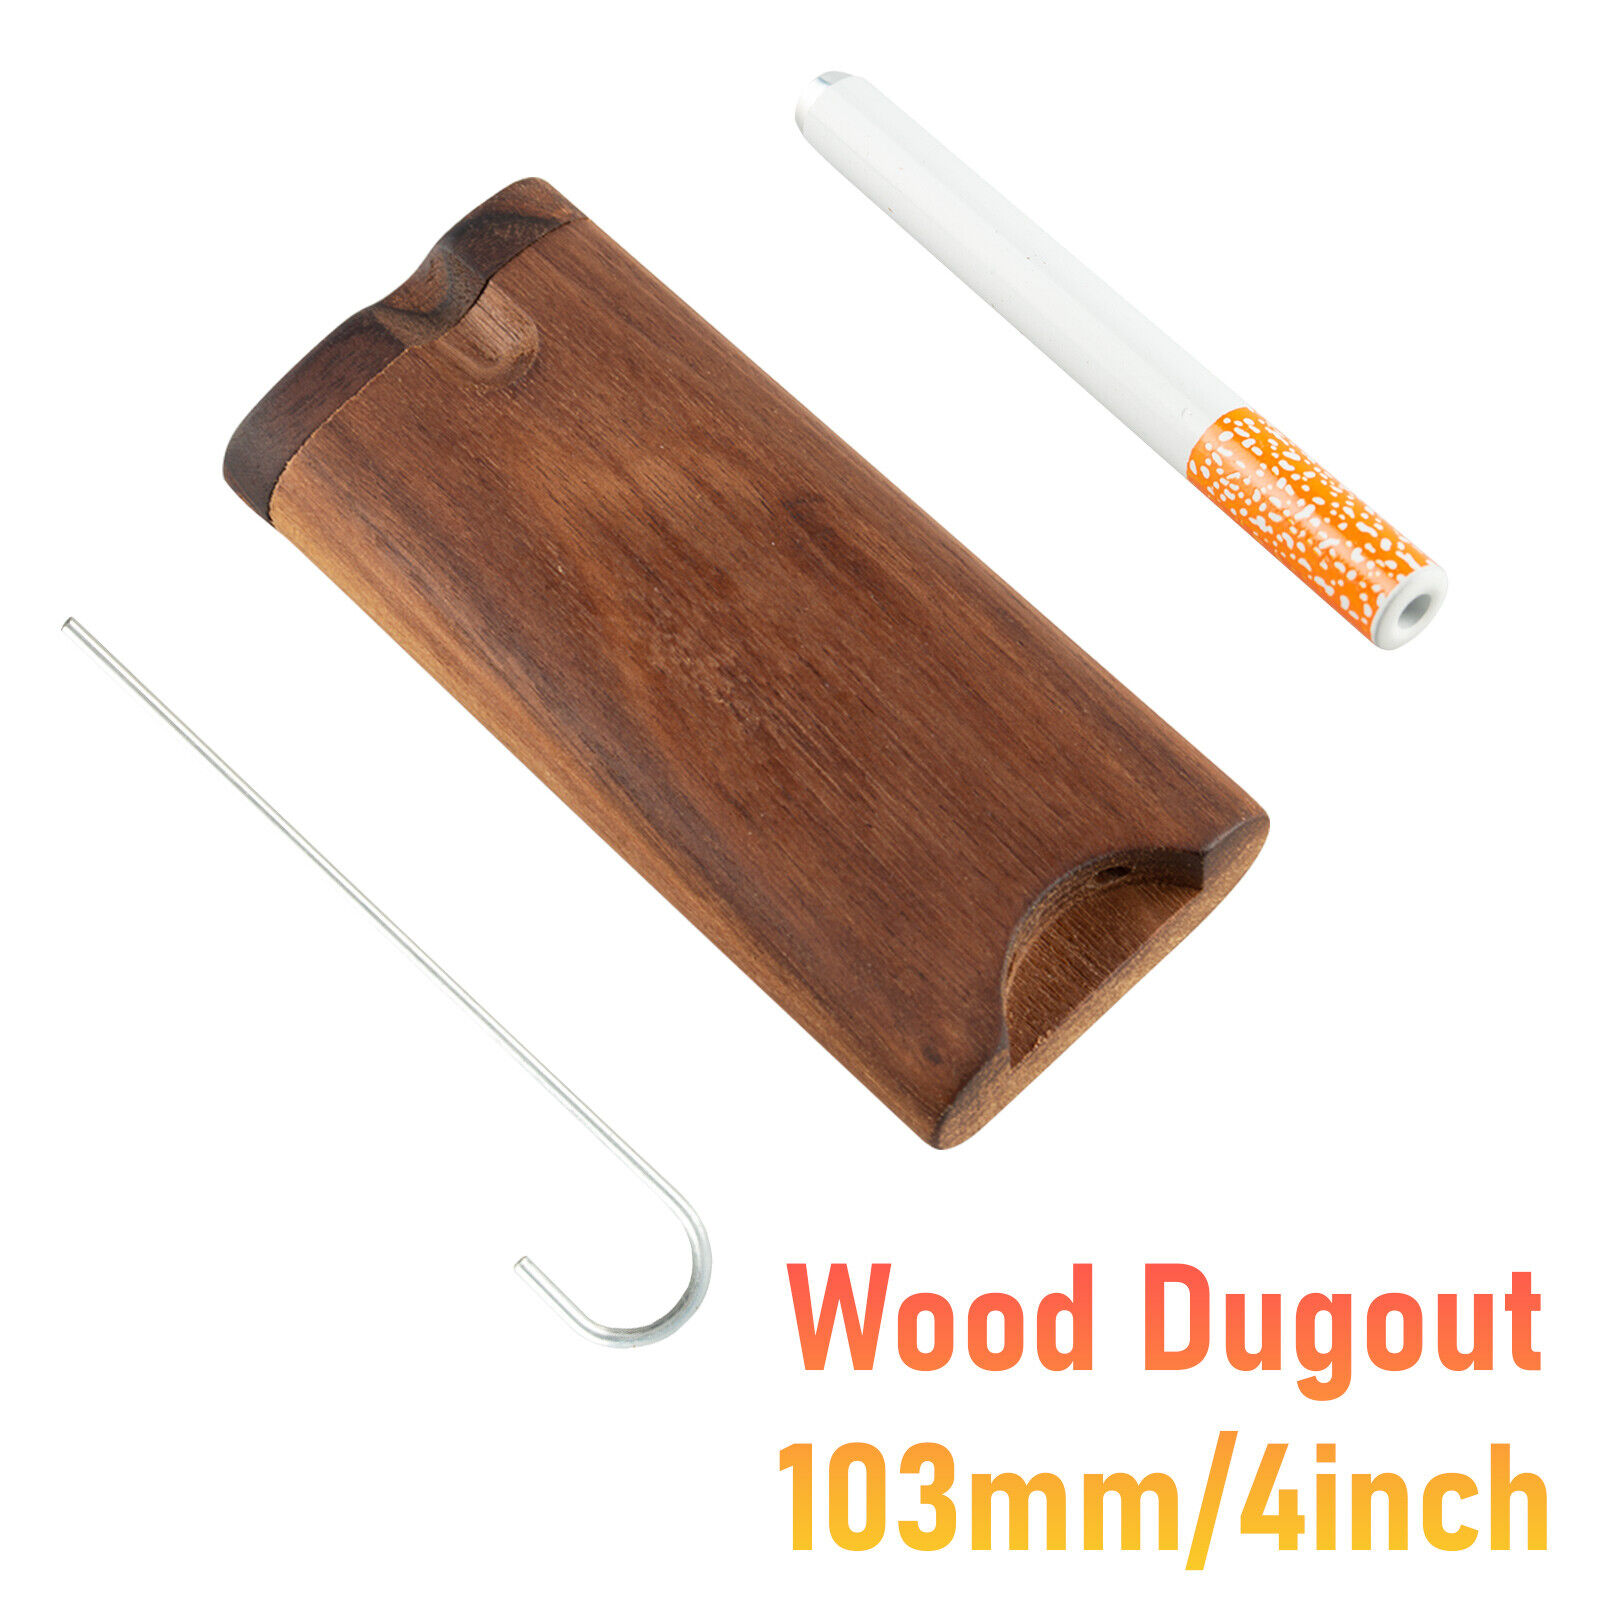 New Wooden Dugout Pipe Self Cleaning Metal Bat Poker Smoking Pipe One Hitter Kit